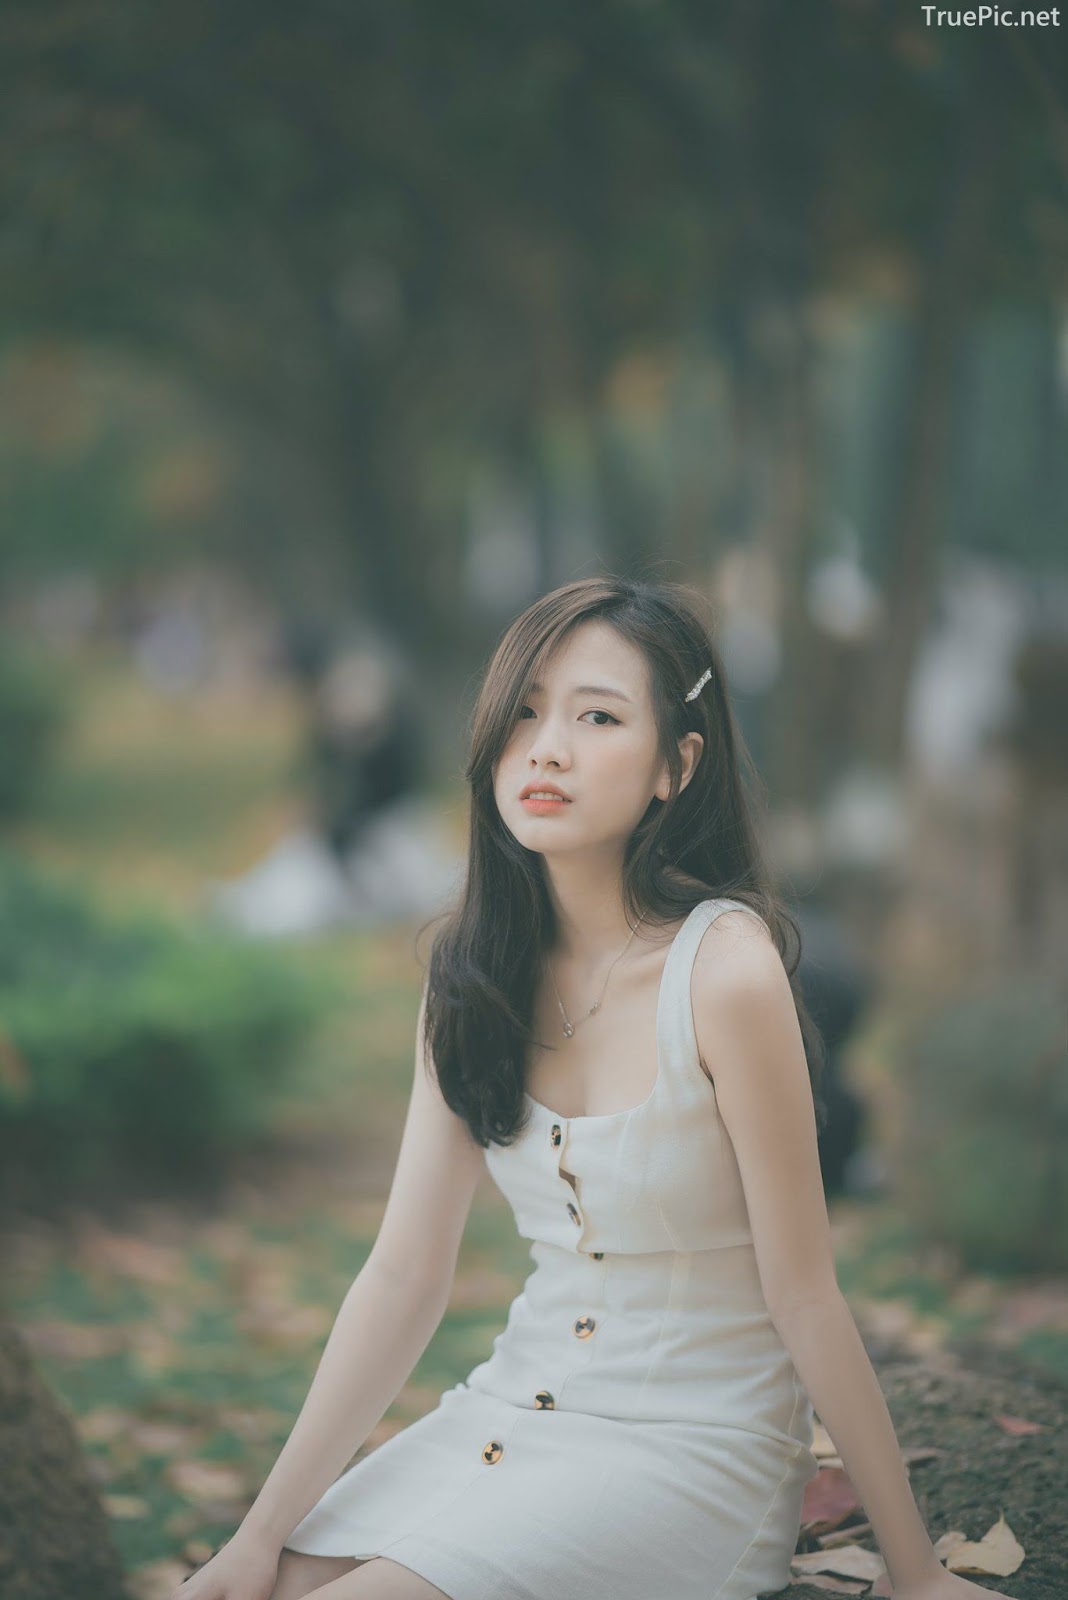 Vietnamese Hot Girl Linh Hoai - Season of falling leaves - TruePic.net - Picture 14